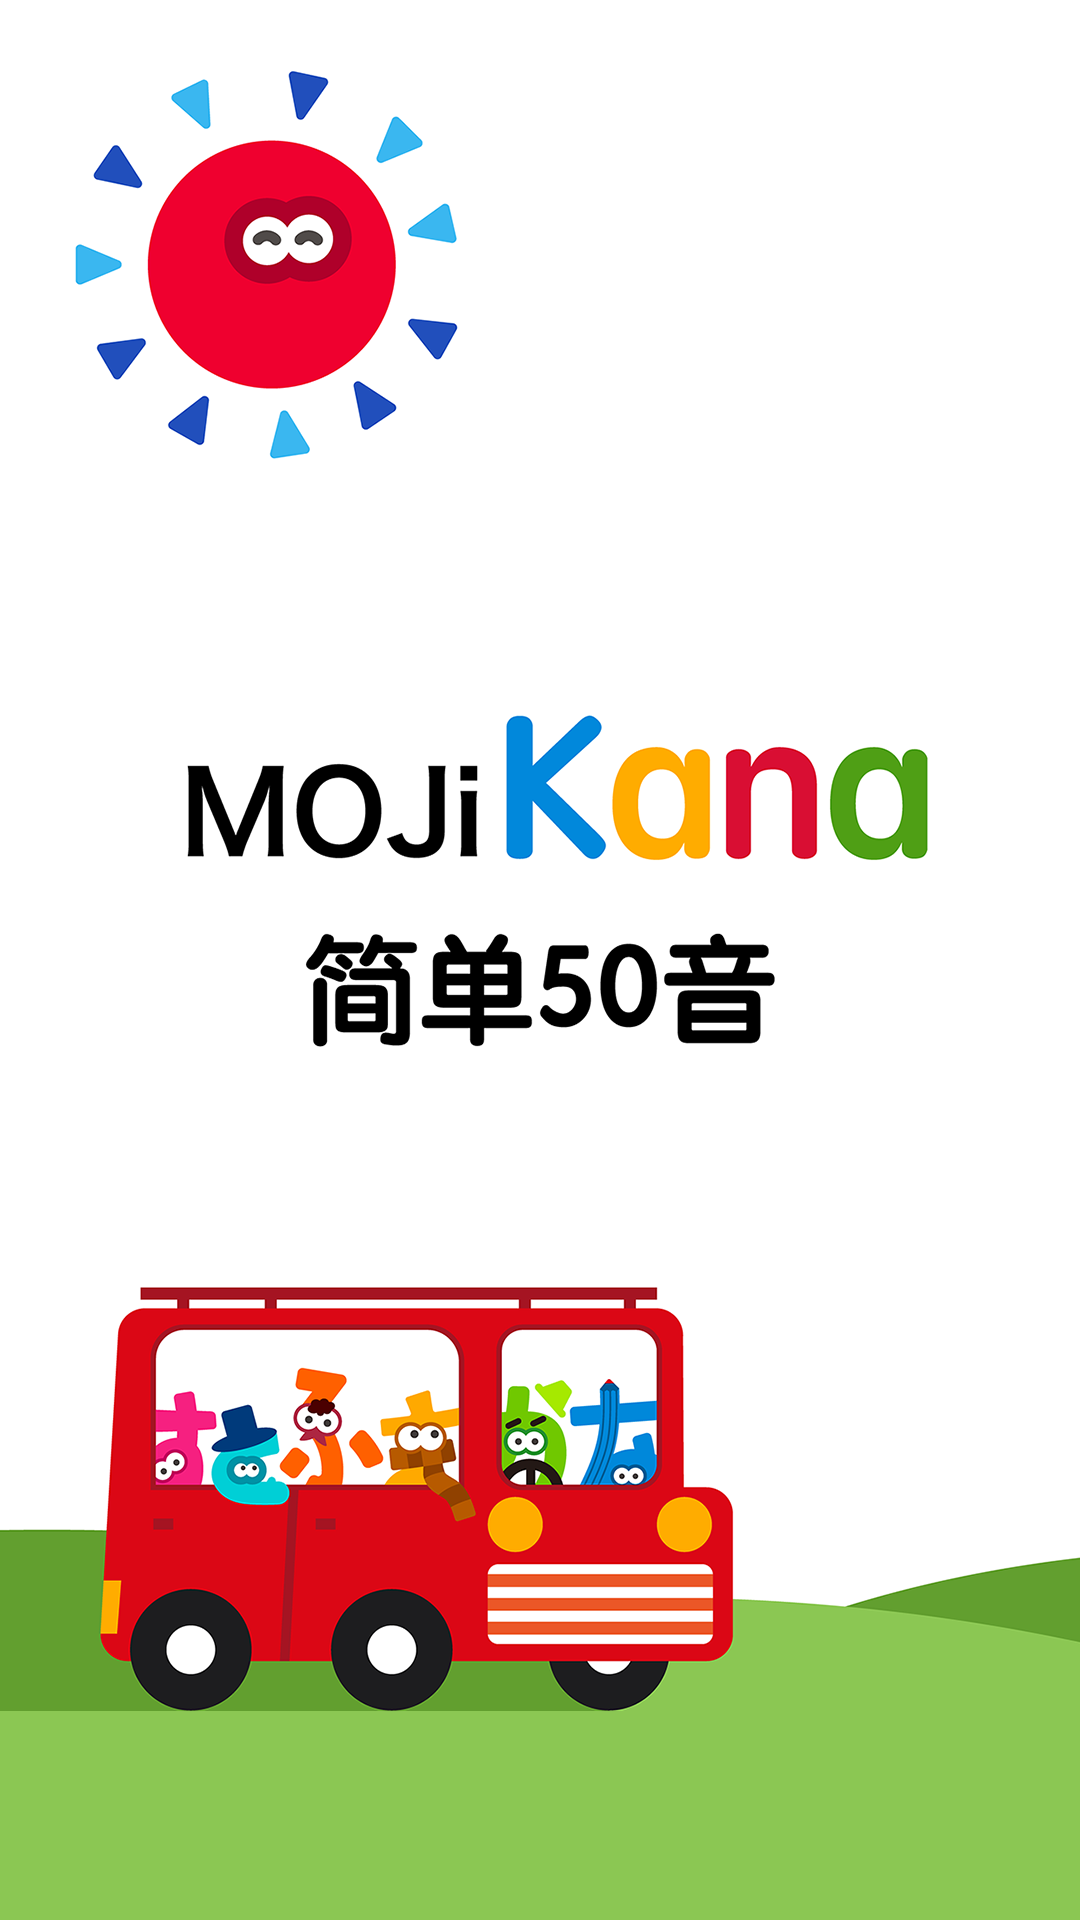 mojikana学日语app下载